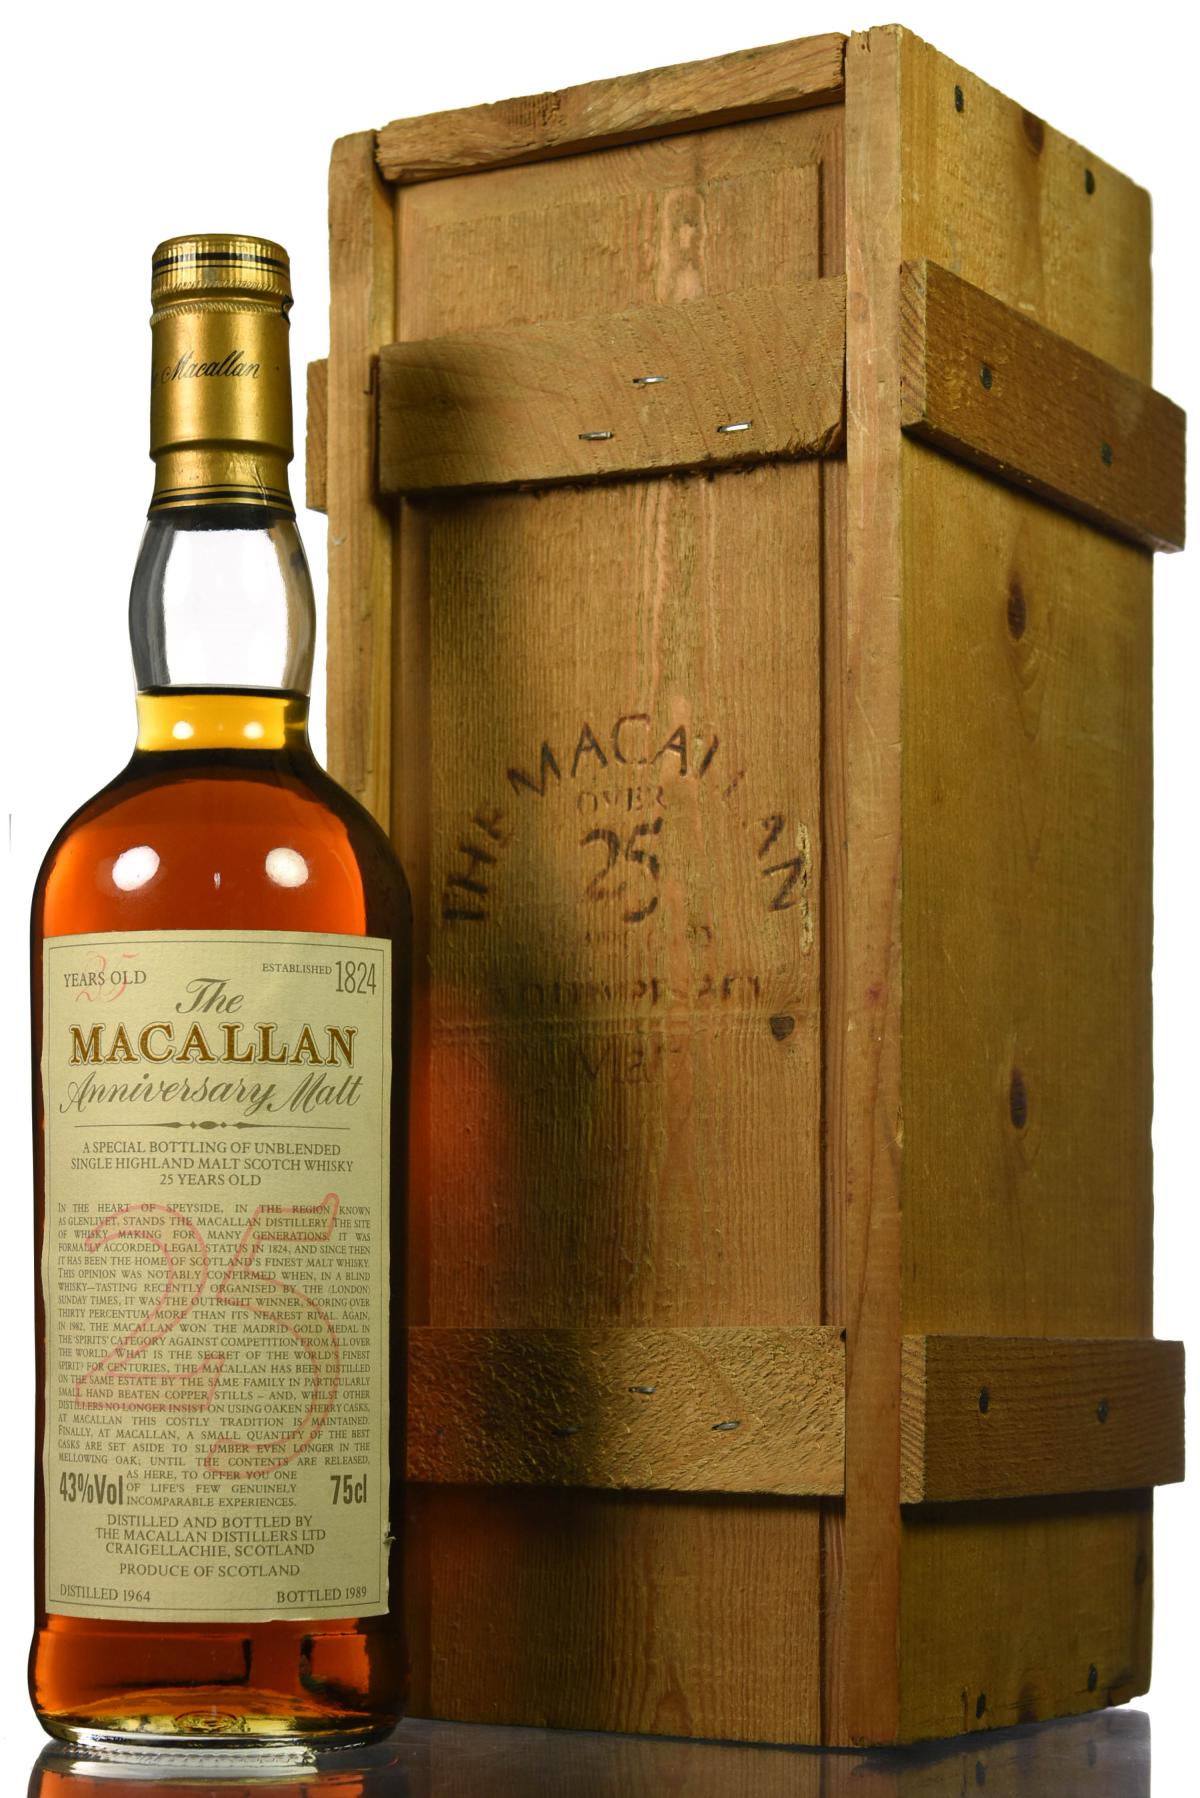 Macallan 1964-1989 - 25 Year Old Anniversary Malt